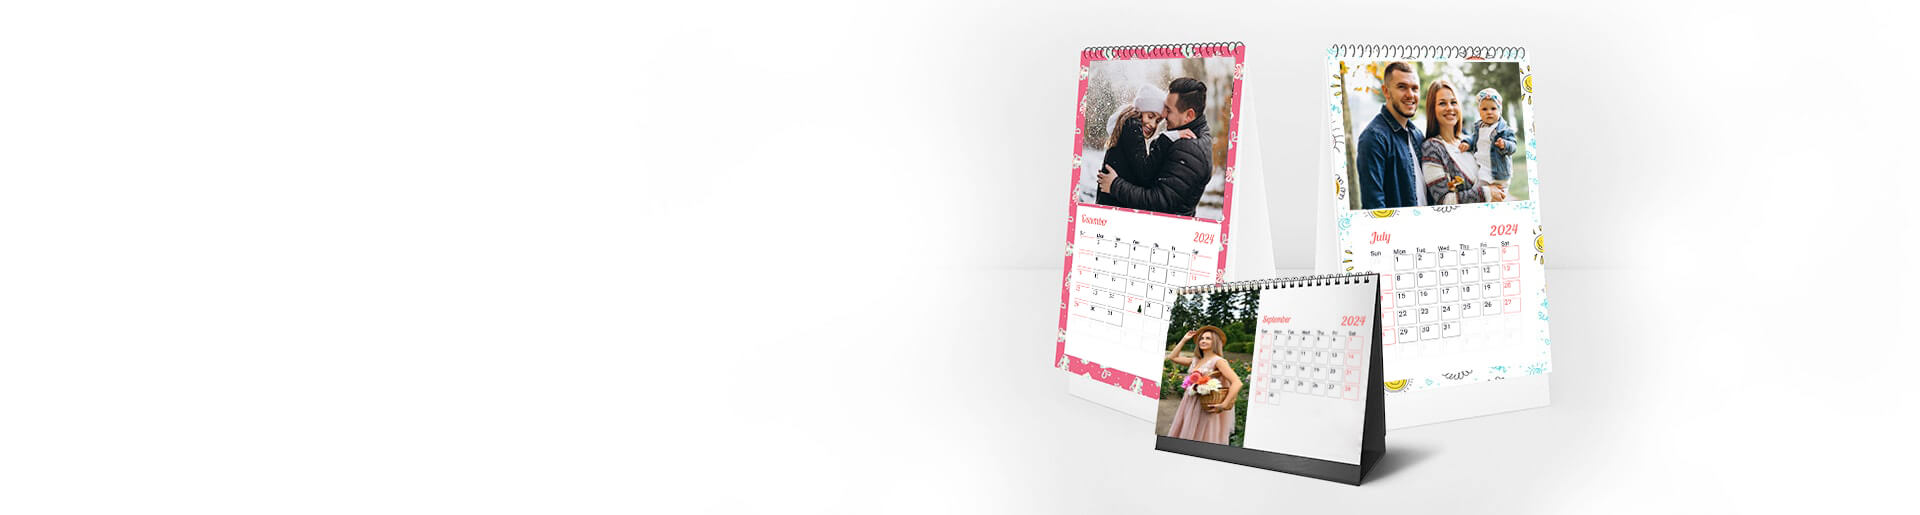 Custom Desk Calendars Personalized Photo Desk Calendars Online